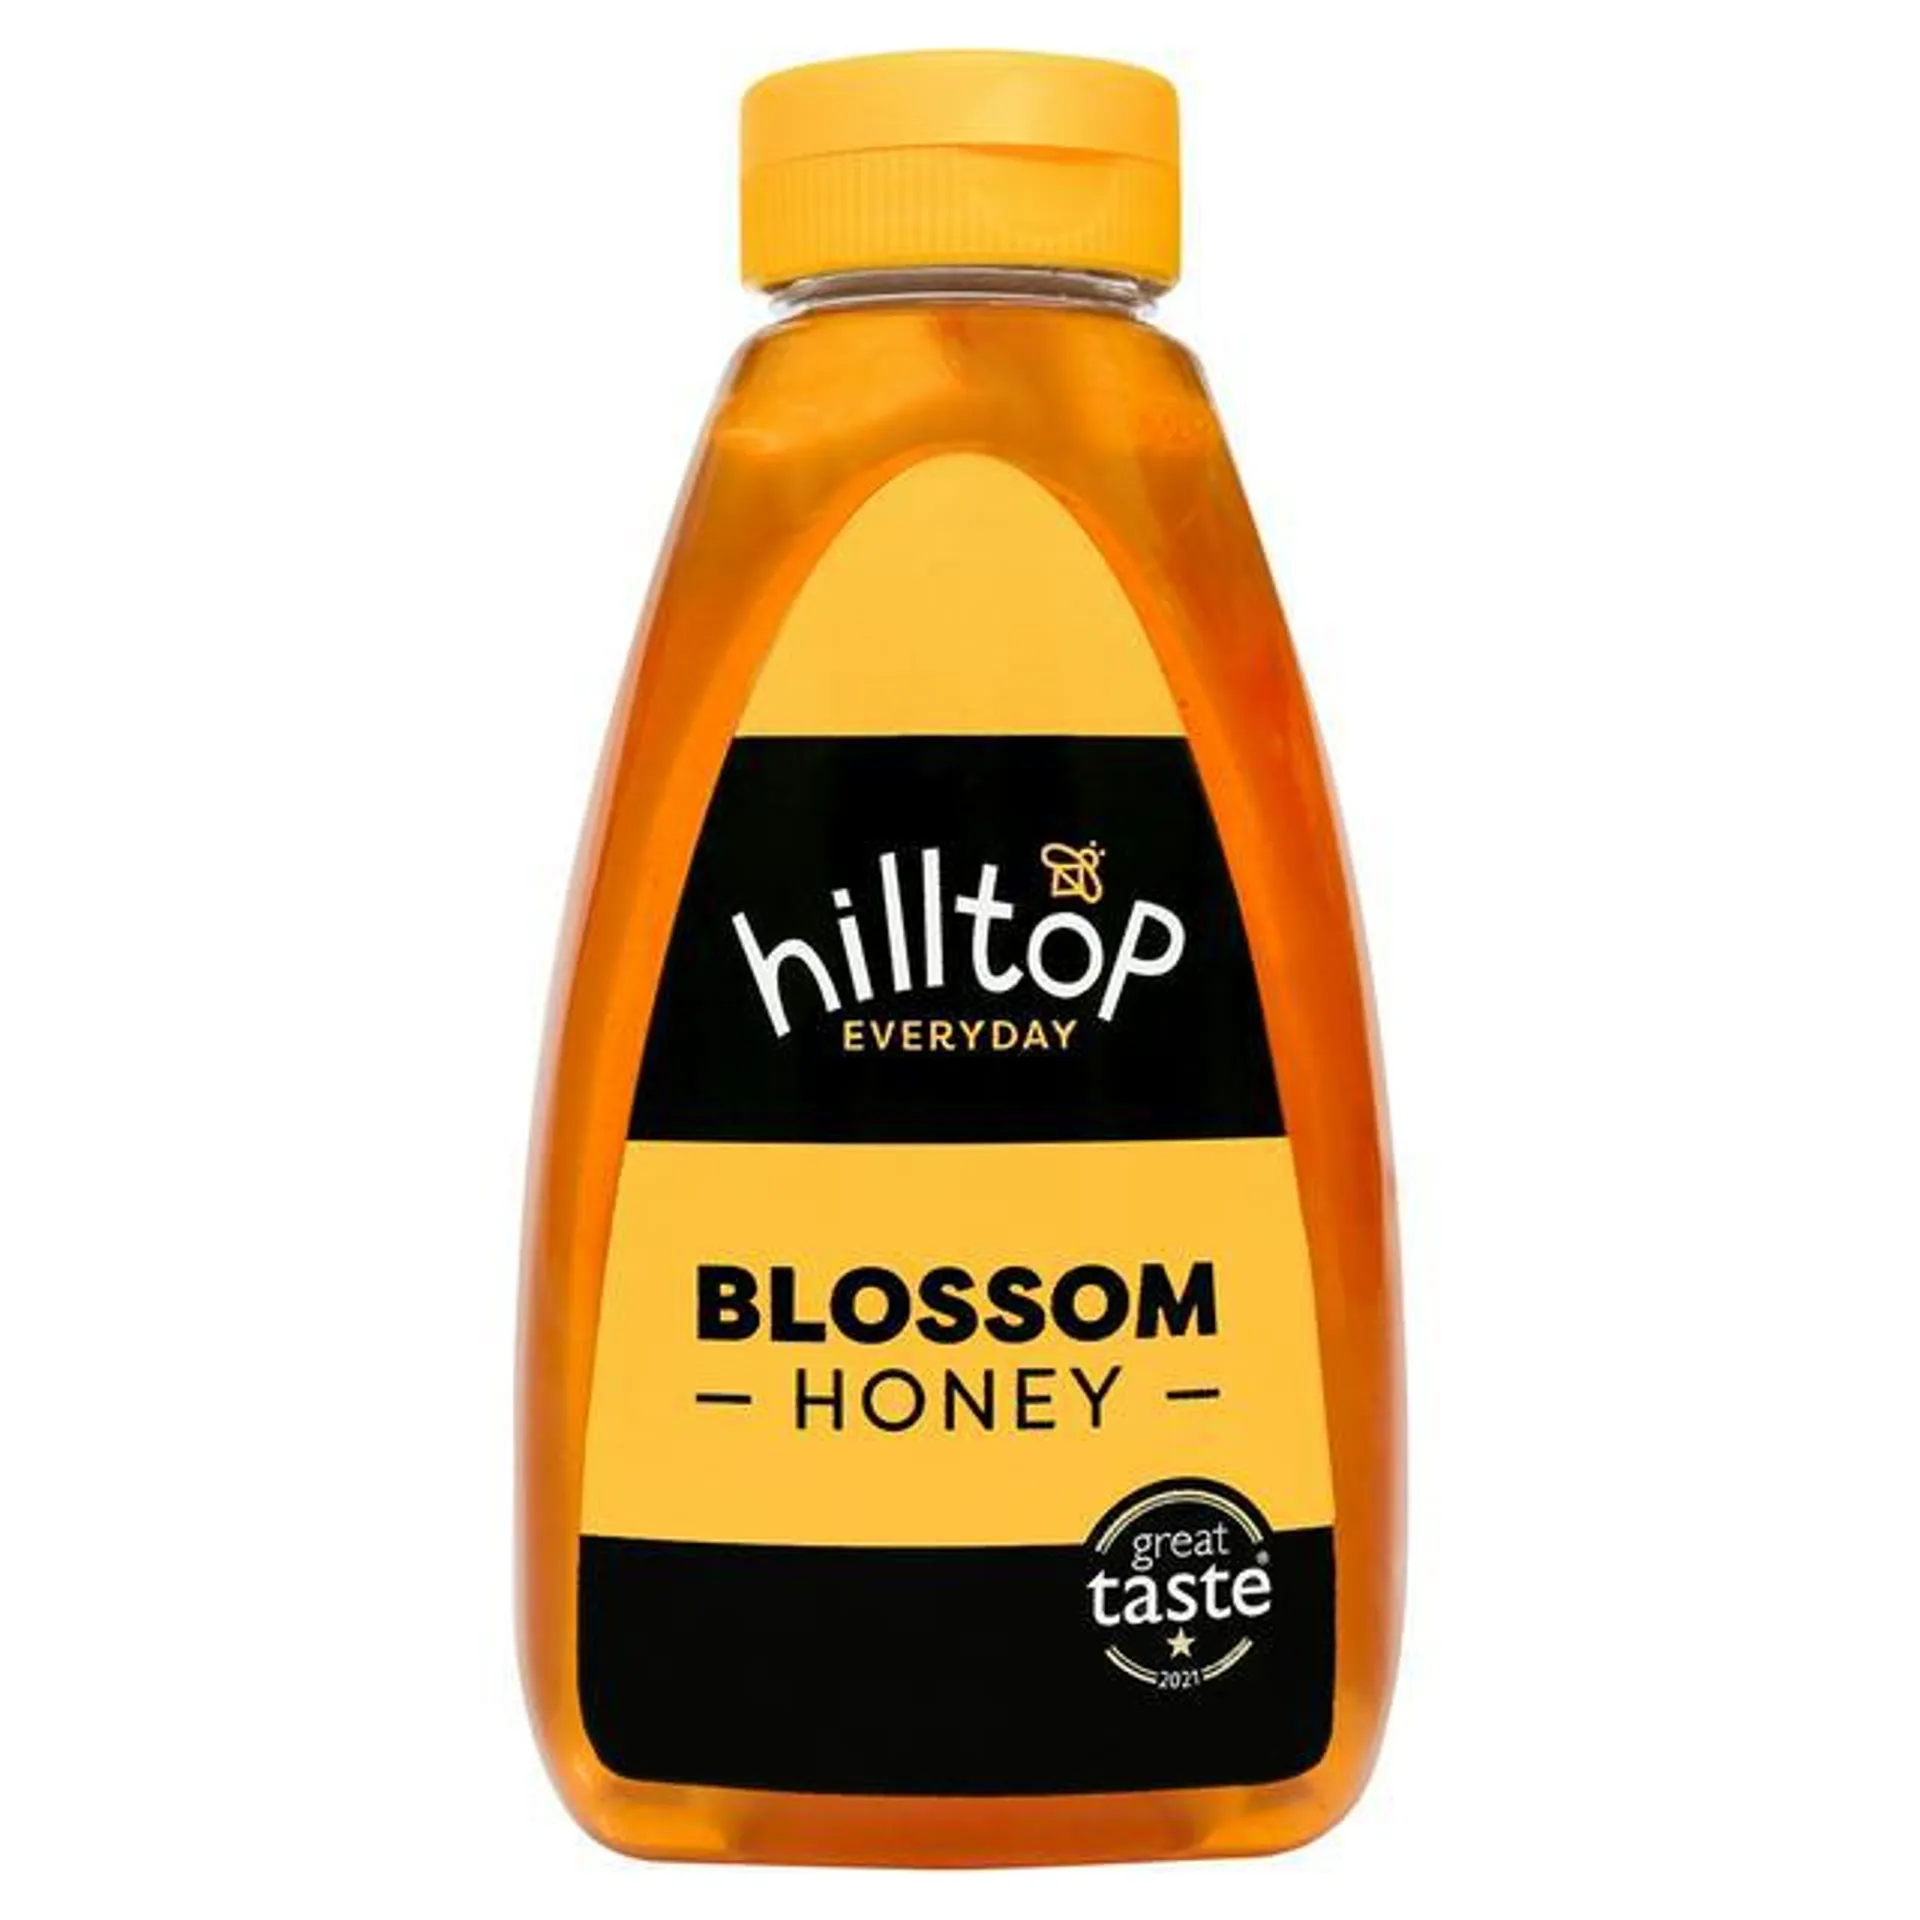 Hilltop Everyday Blossom Honey 720g